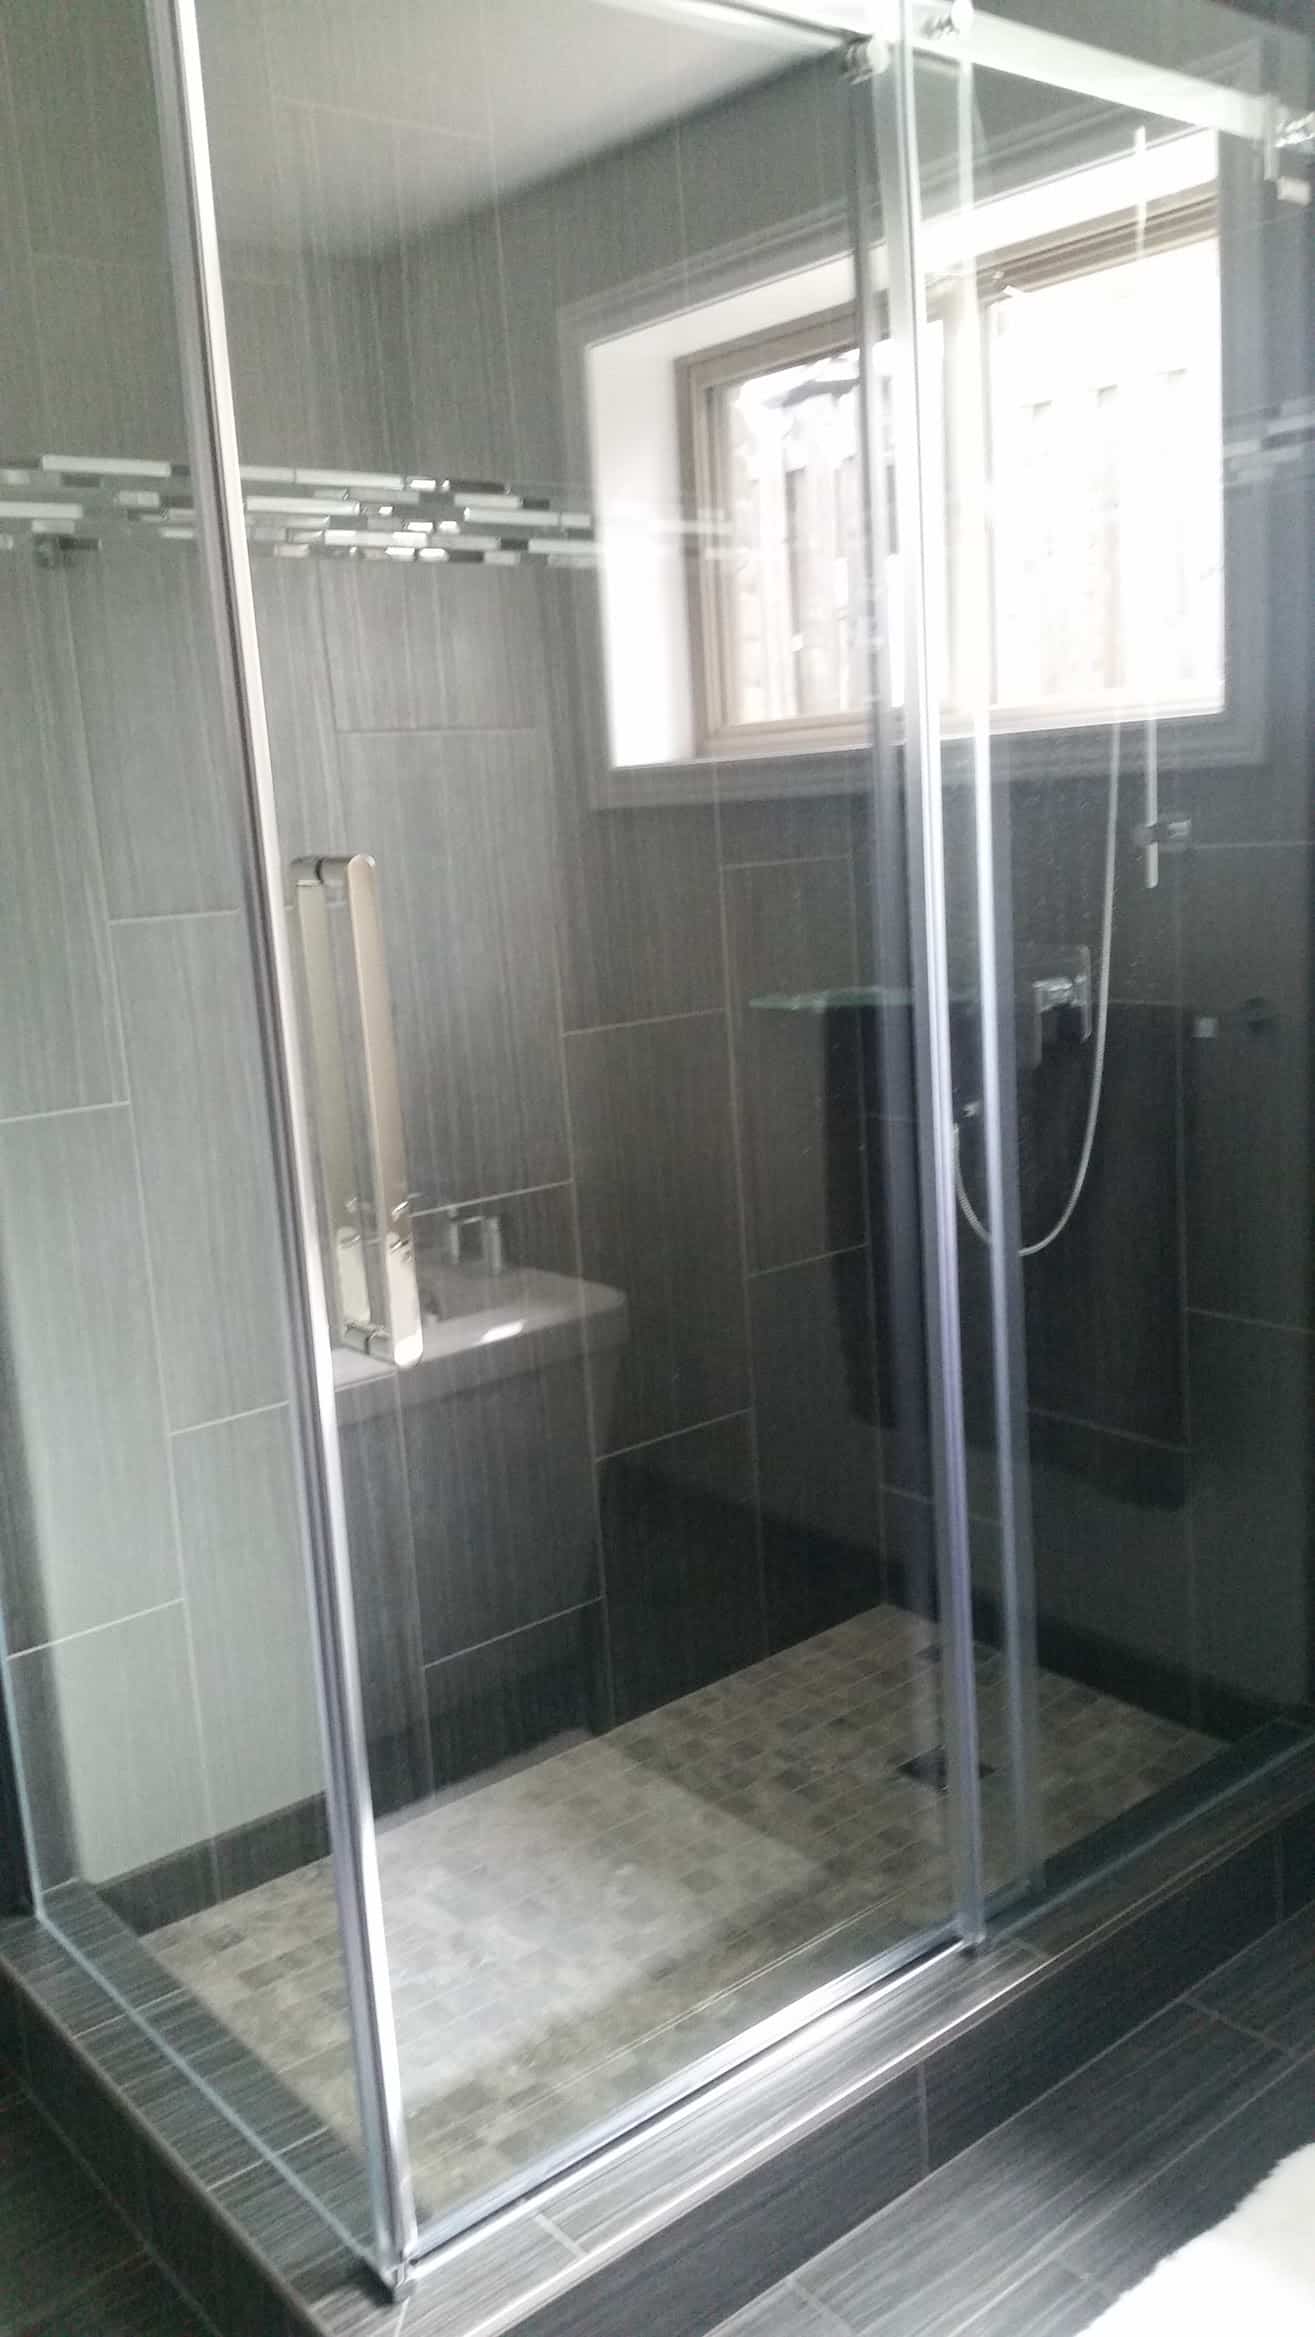 Shower stall glass doors